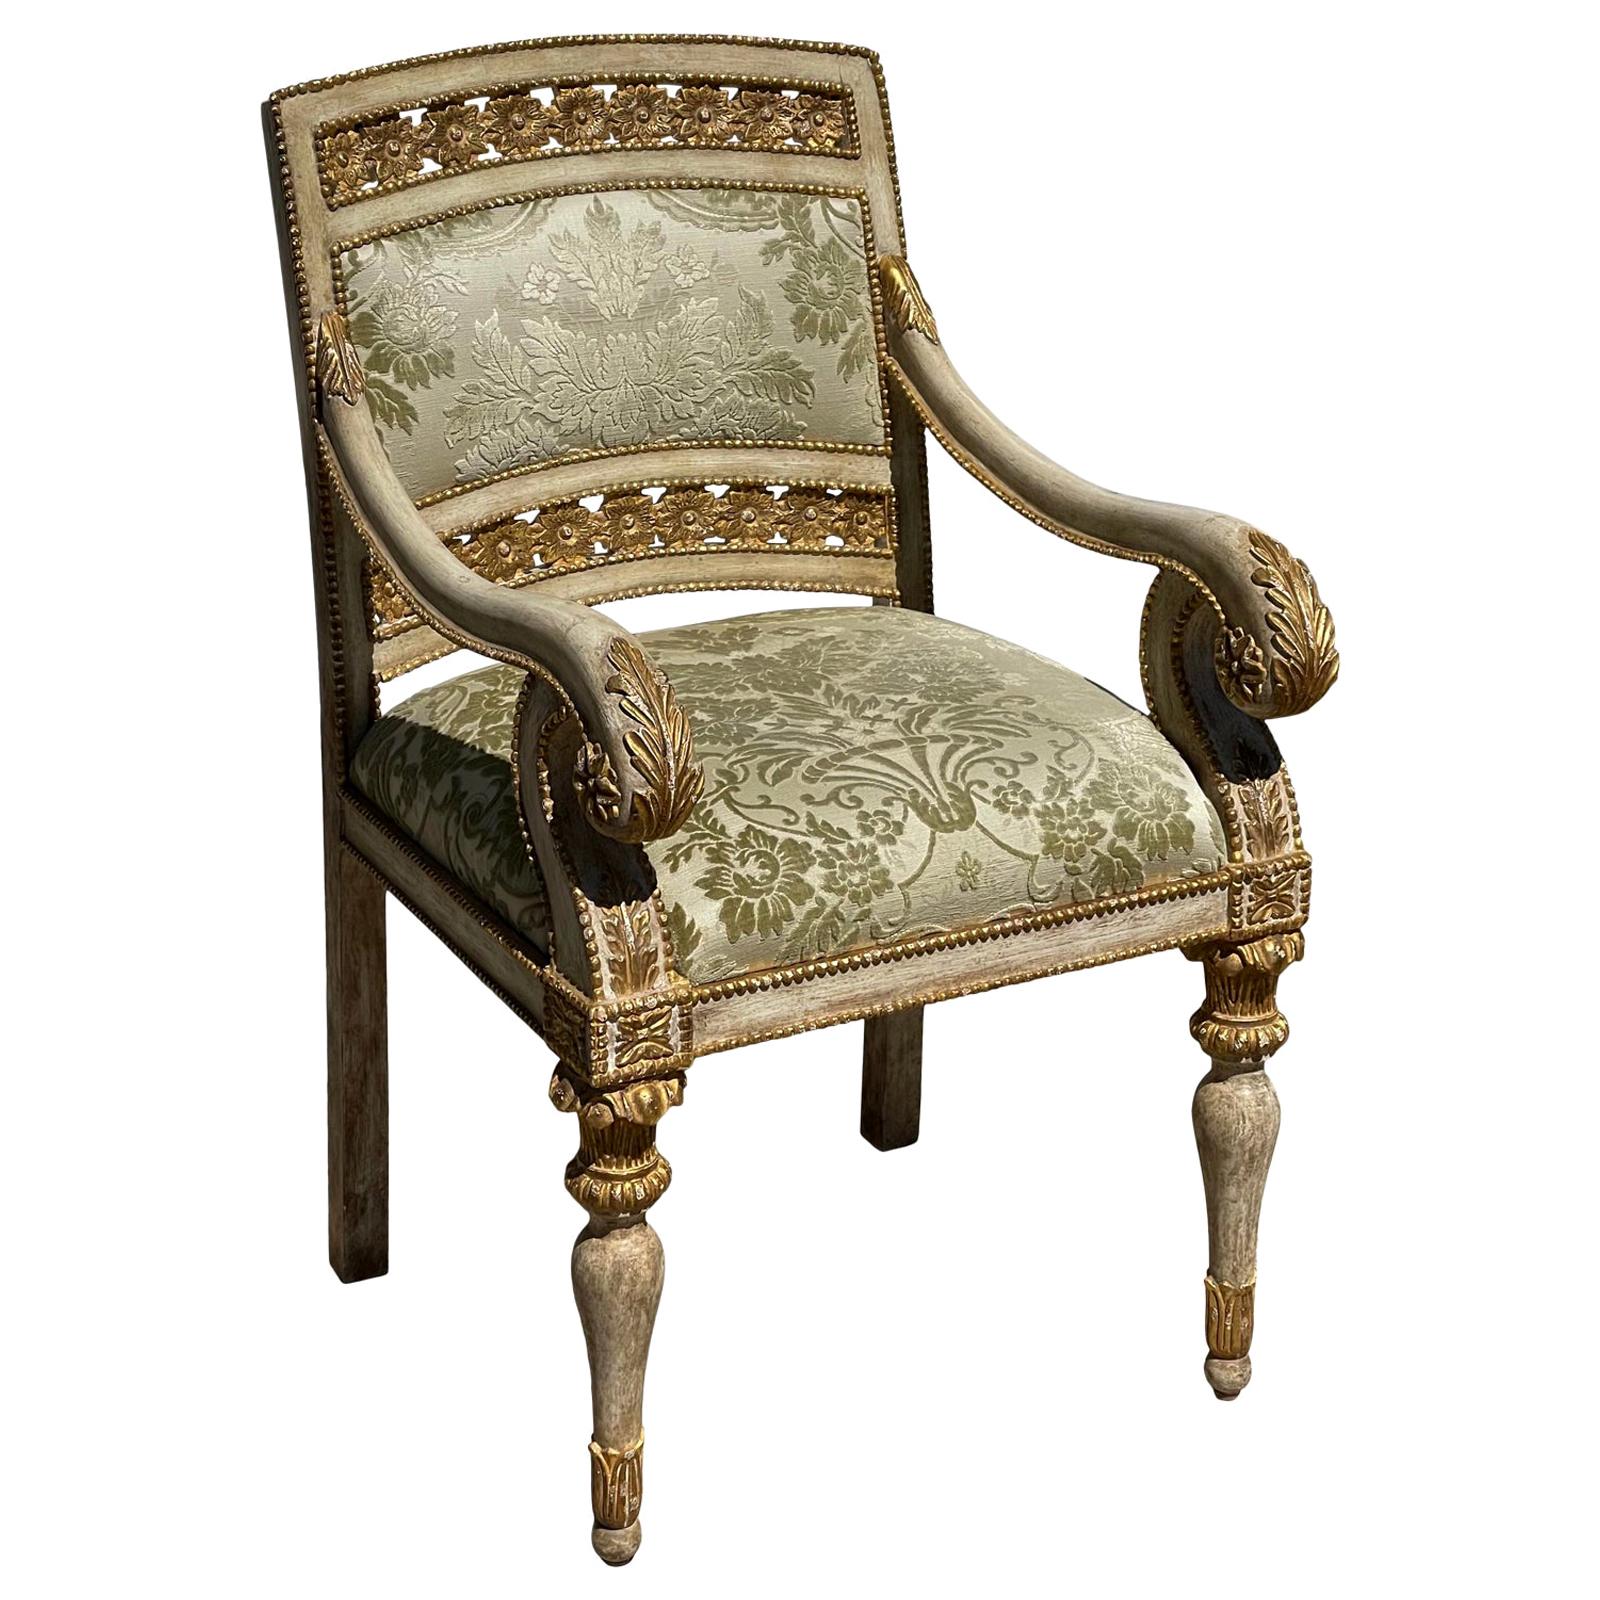 Dessin Fournir, Quatrain Piedmontese Pierced Carved Italian Giltwood Chair